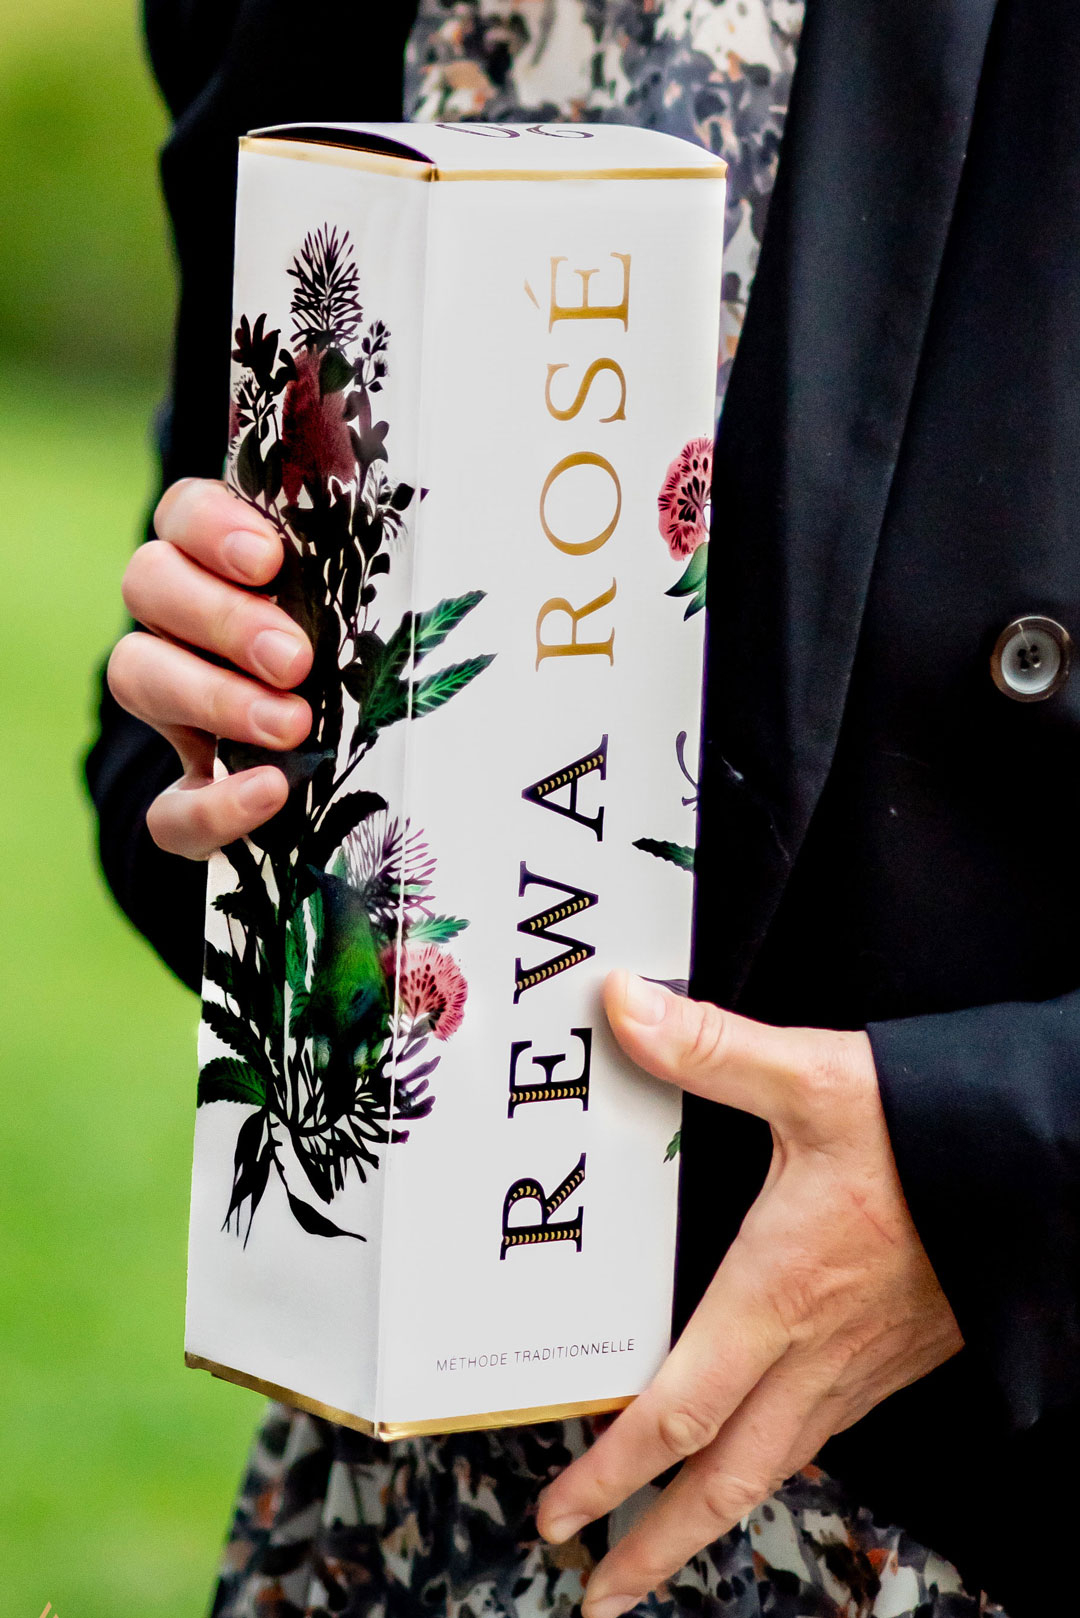 Rewa rose wine in box held in a woman's hands